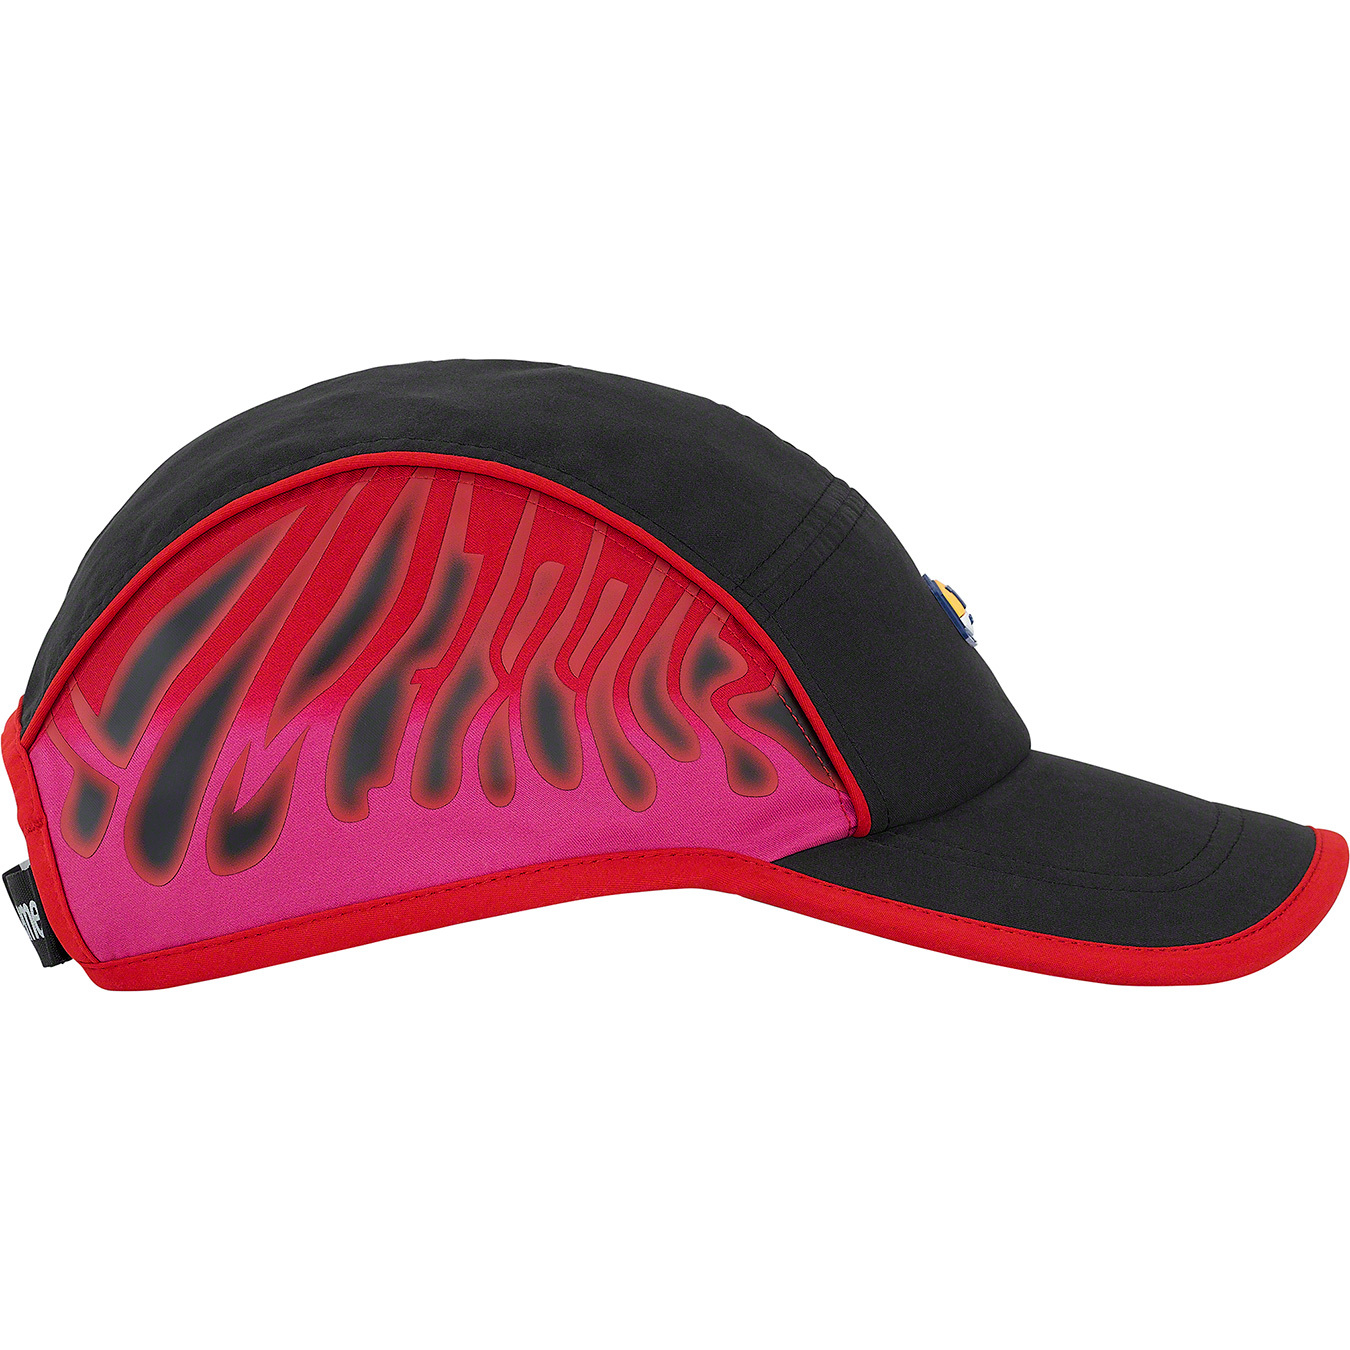 Supreme®/Nike® Air Max Plus Running Hat